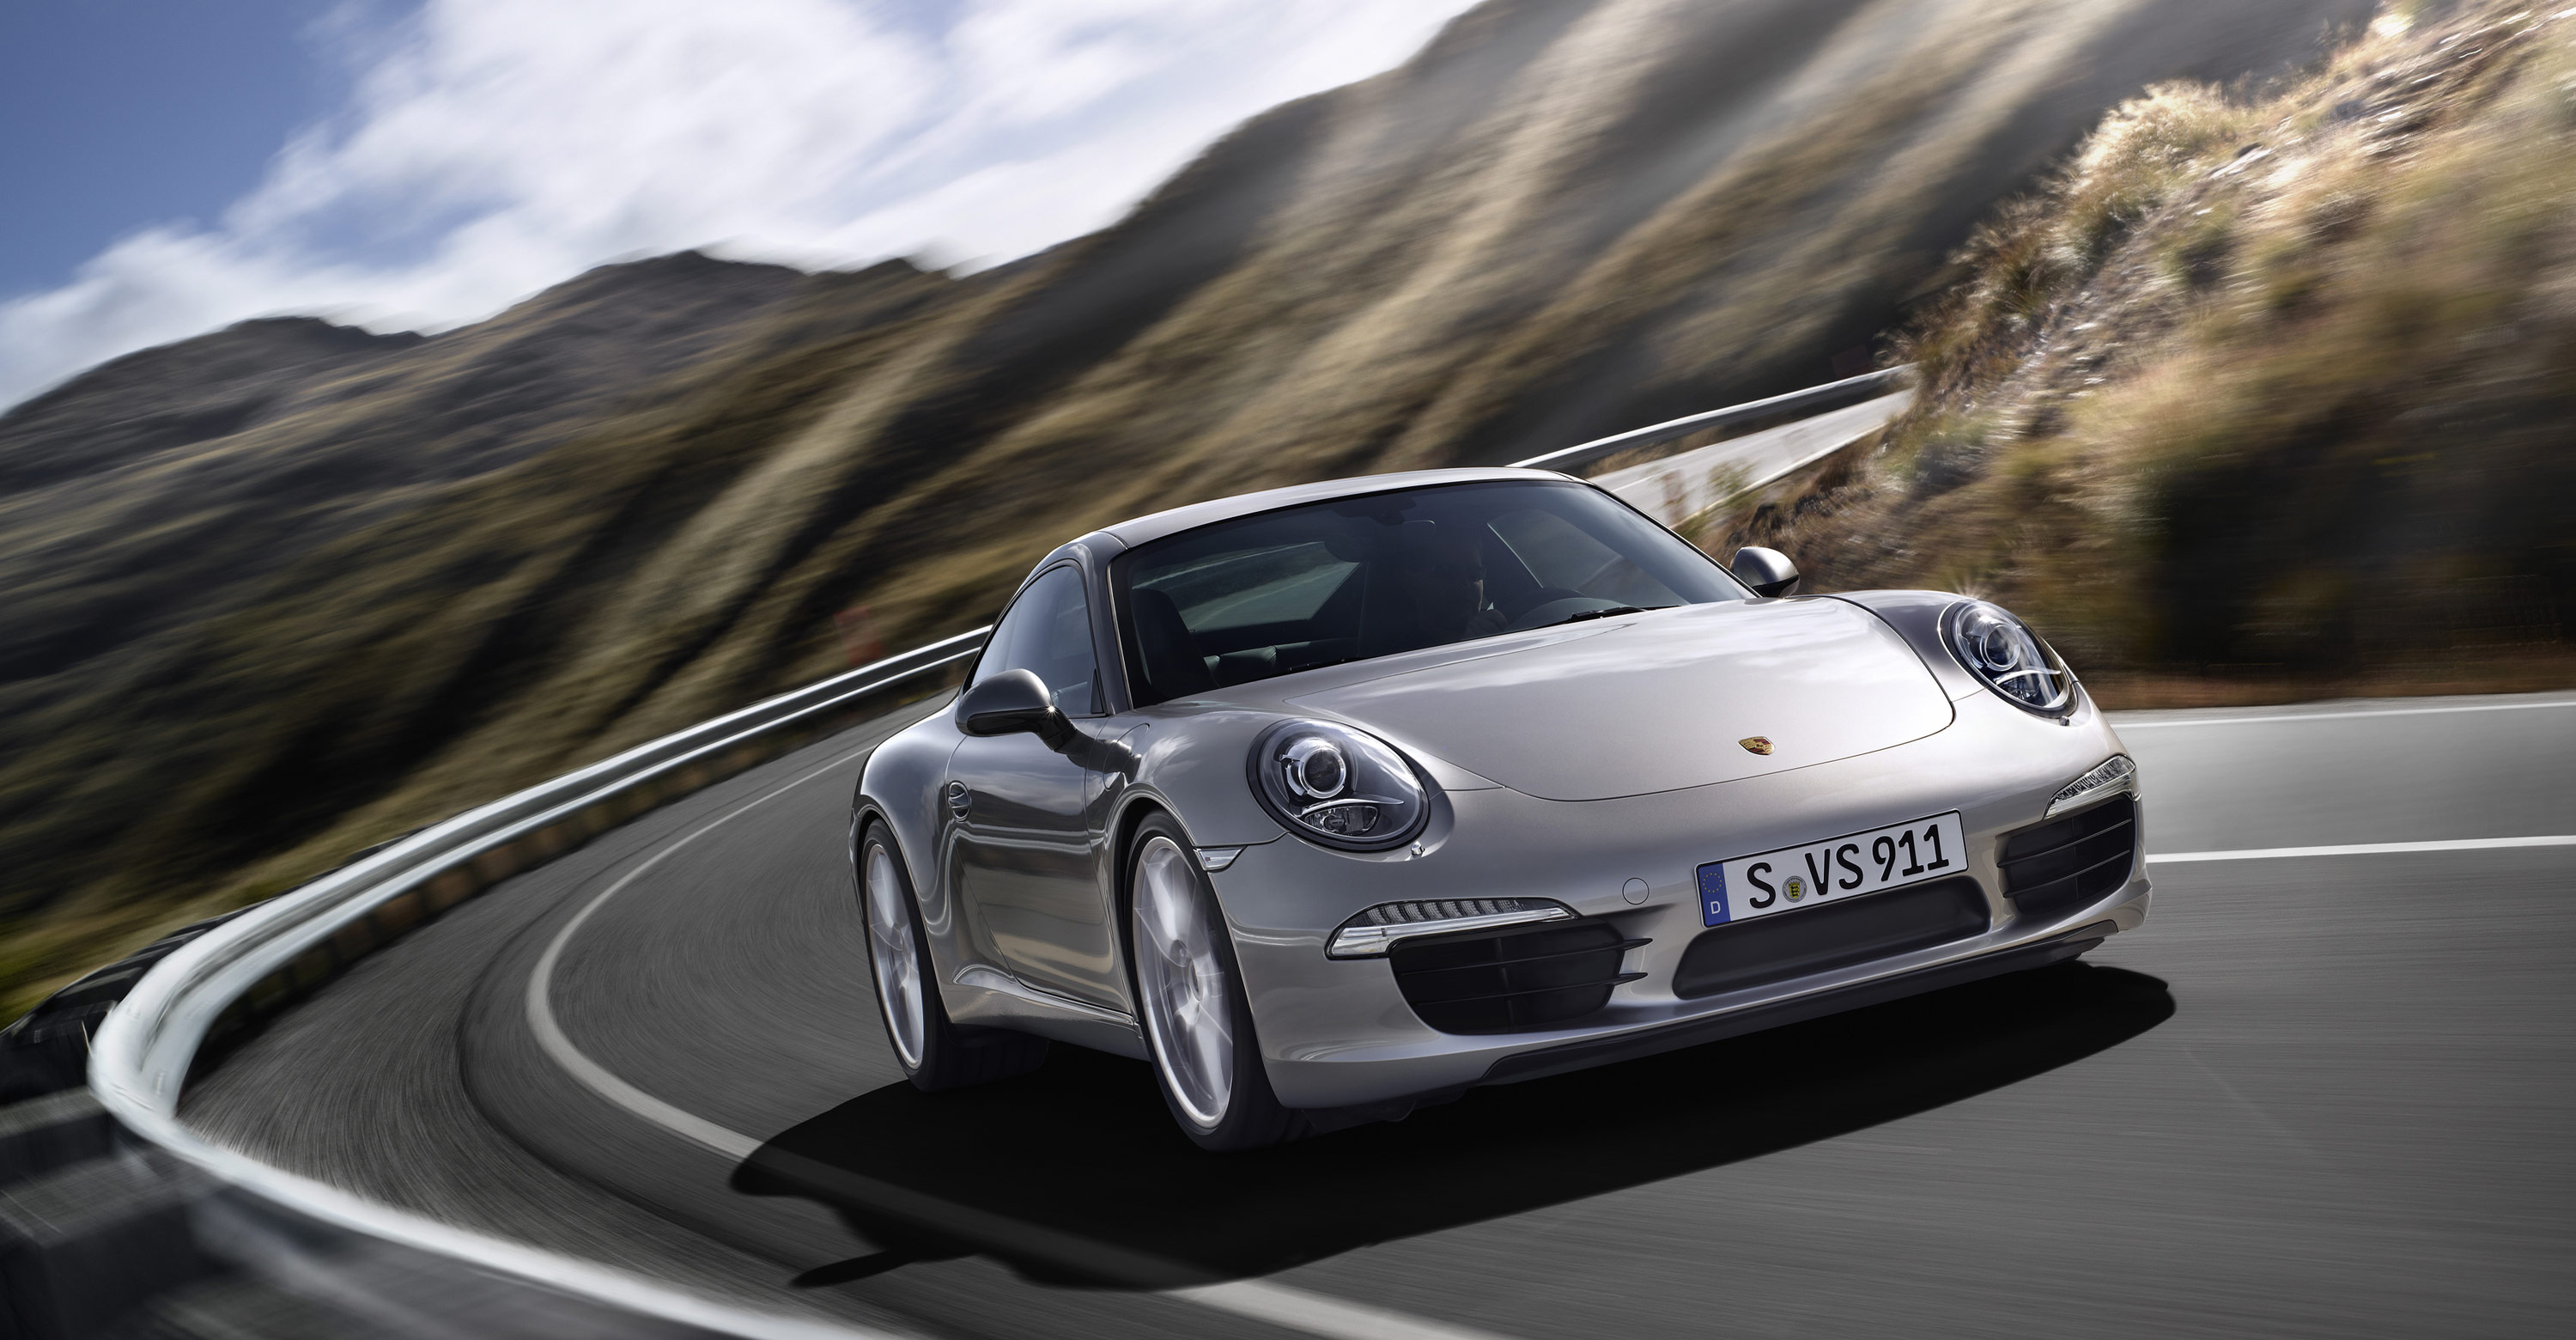 Porsche Carrera Wallpaper And Background Image